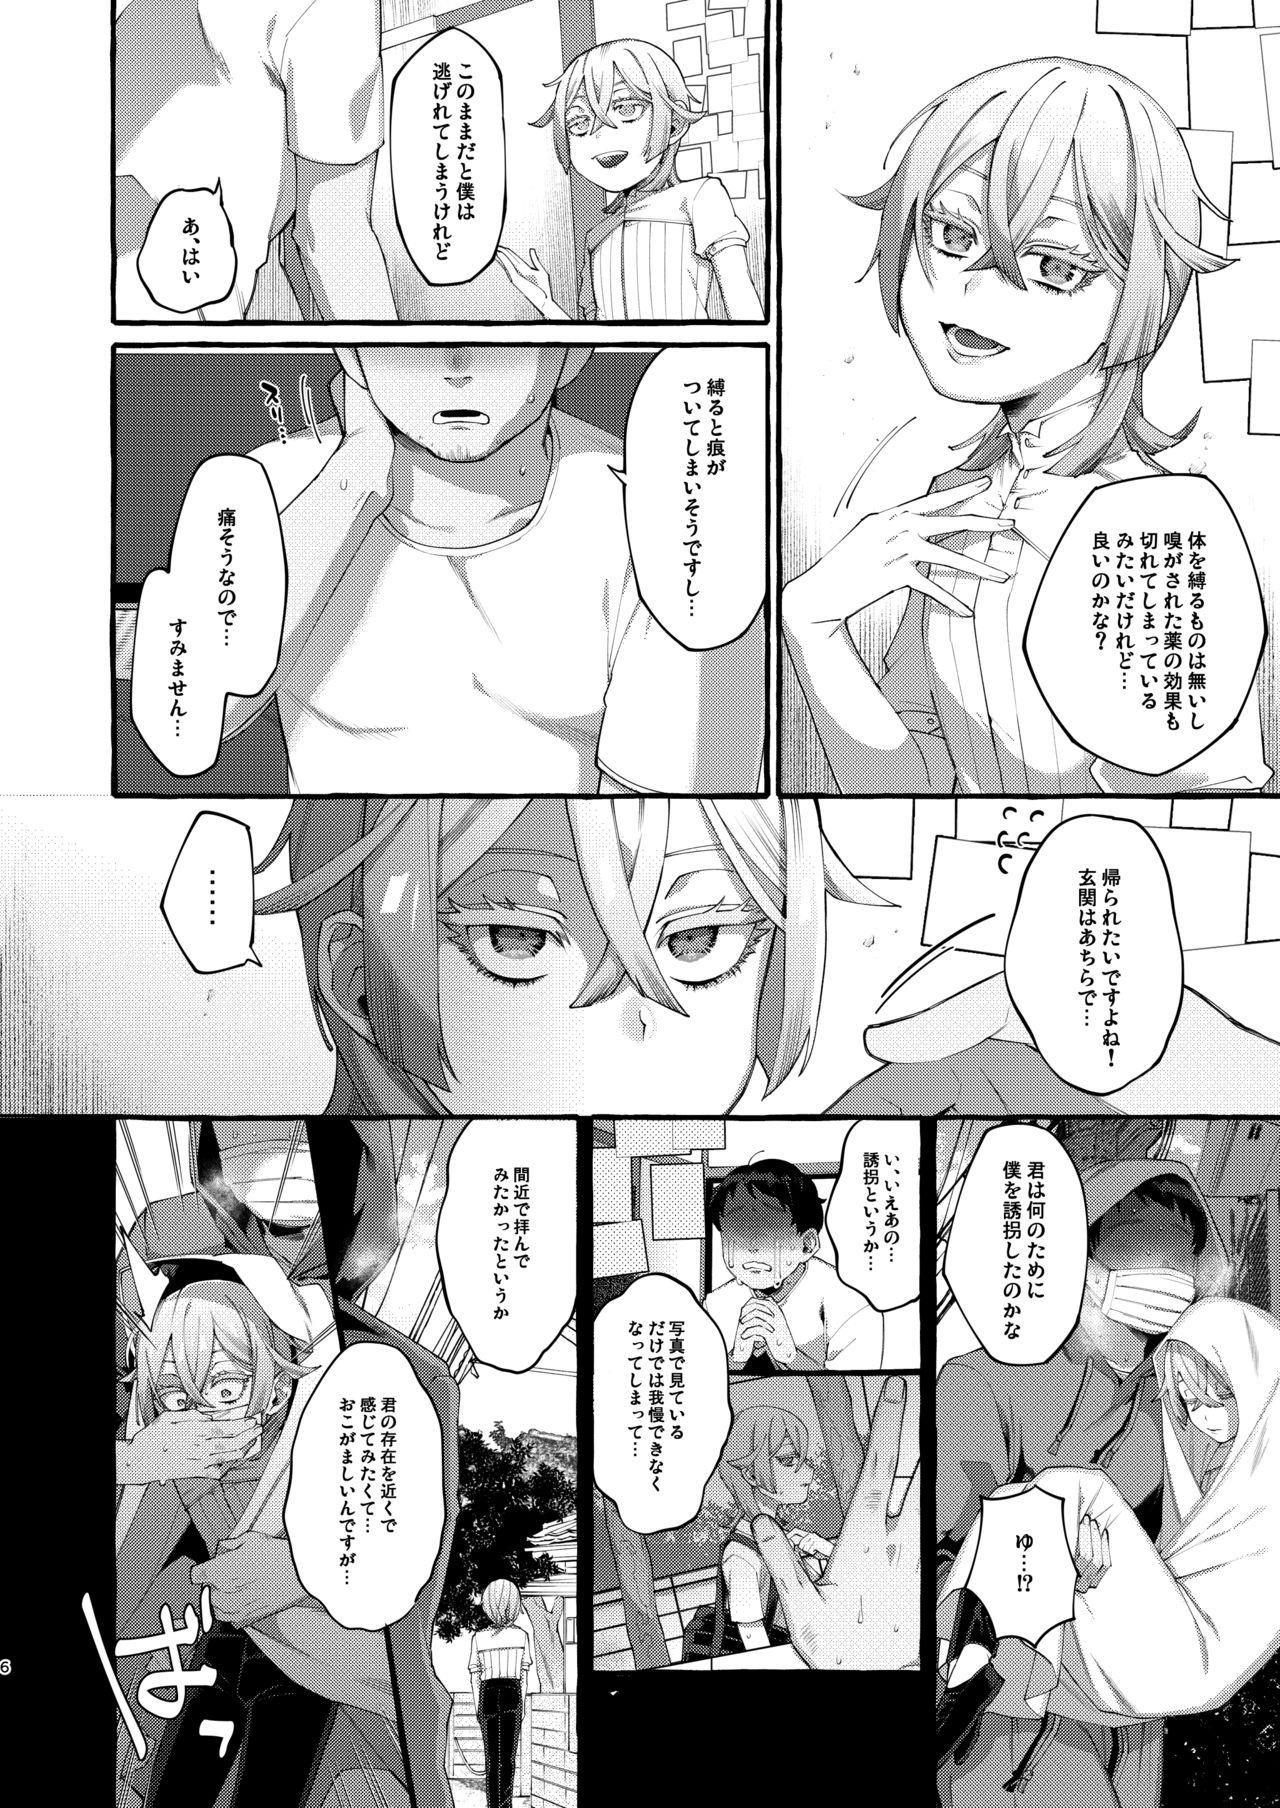 Sixtynine Kare wa Boku no Kami-sama de aru. - Original Longhair - Page 6